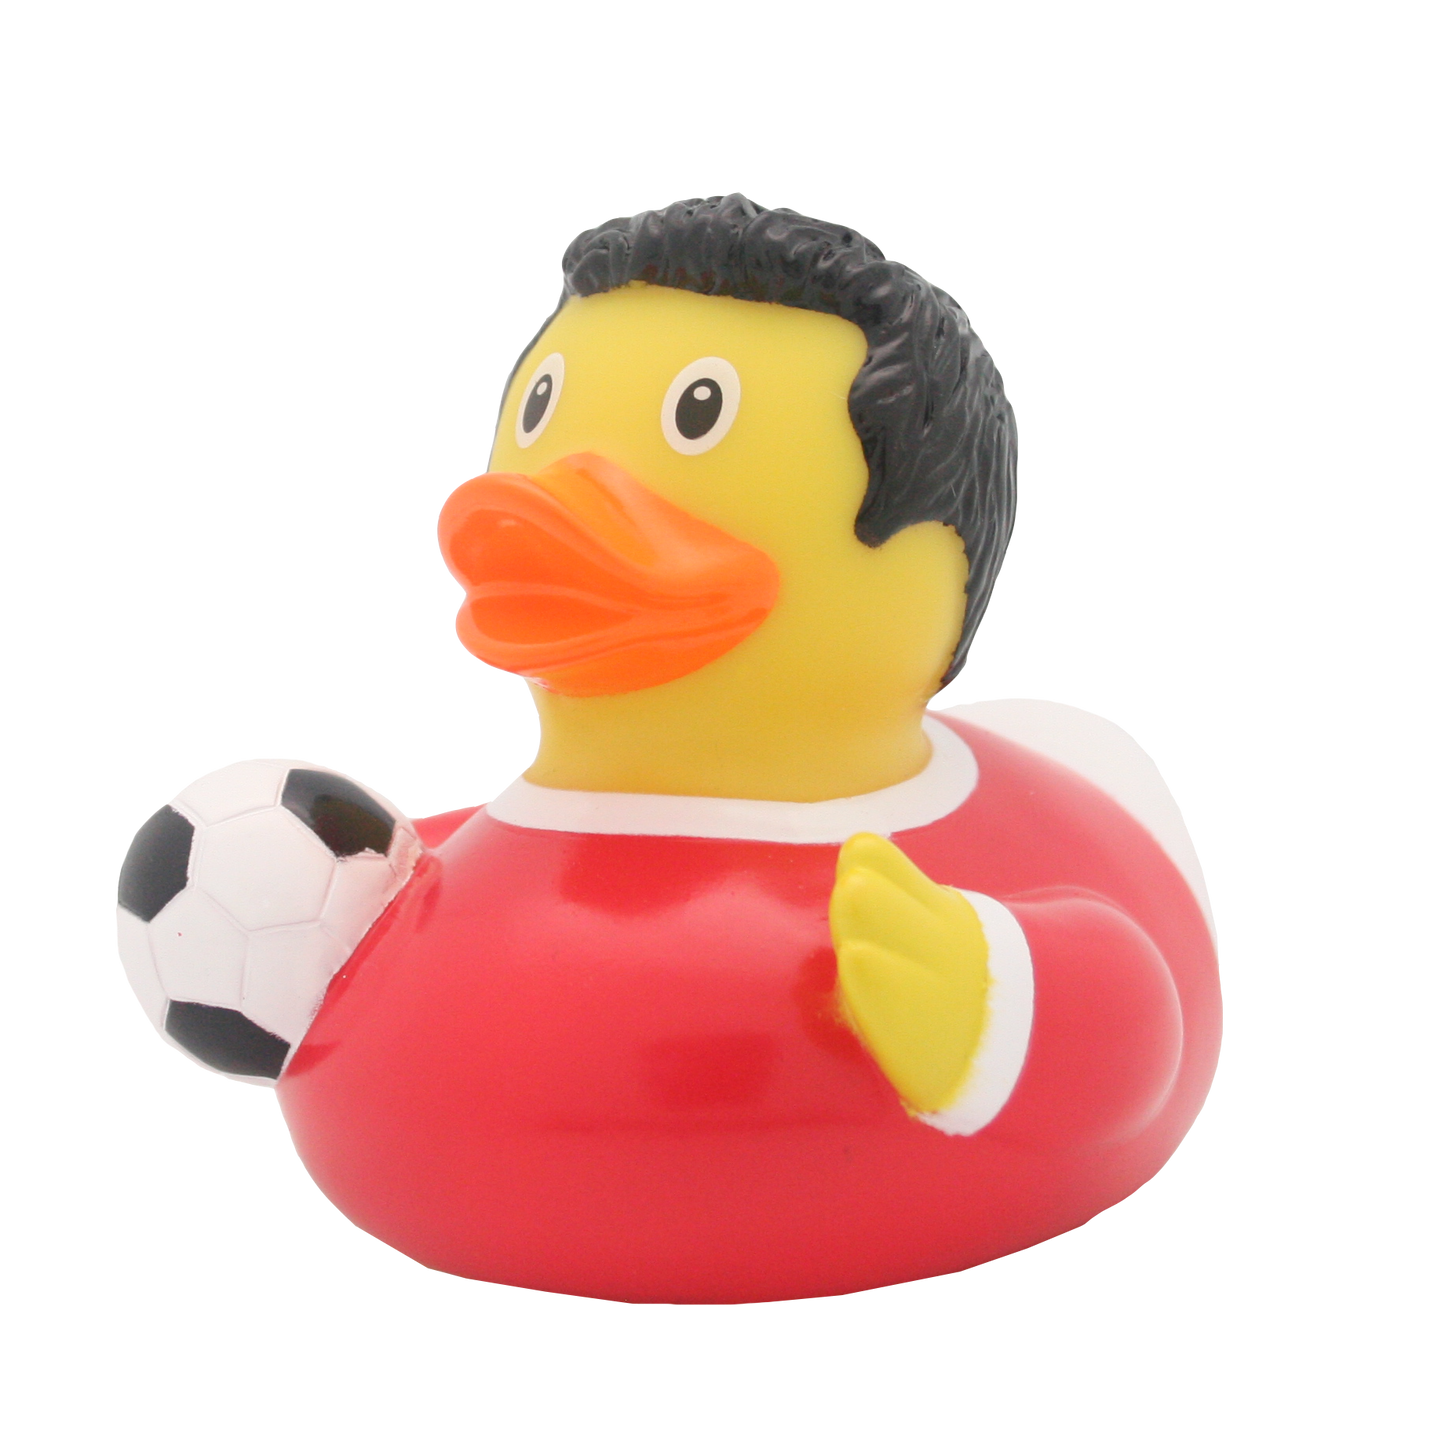 Red footballer duck